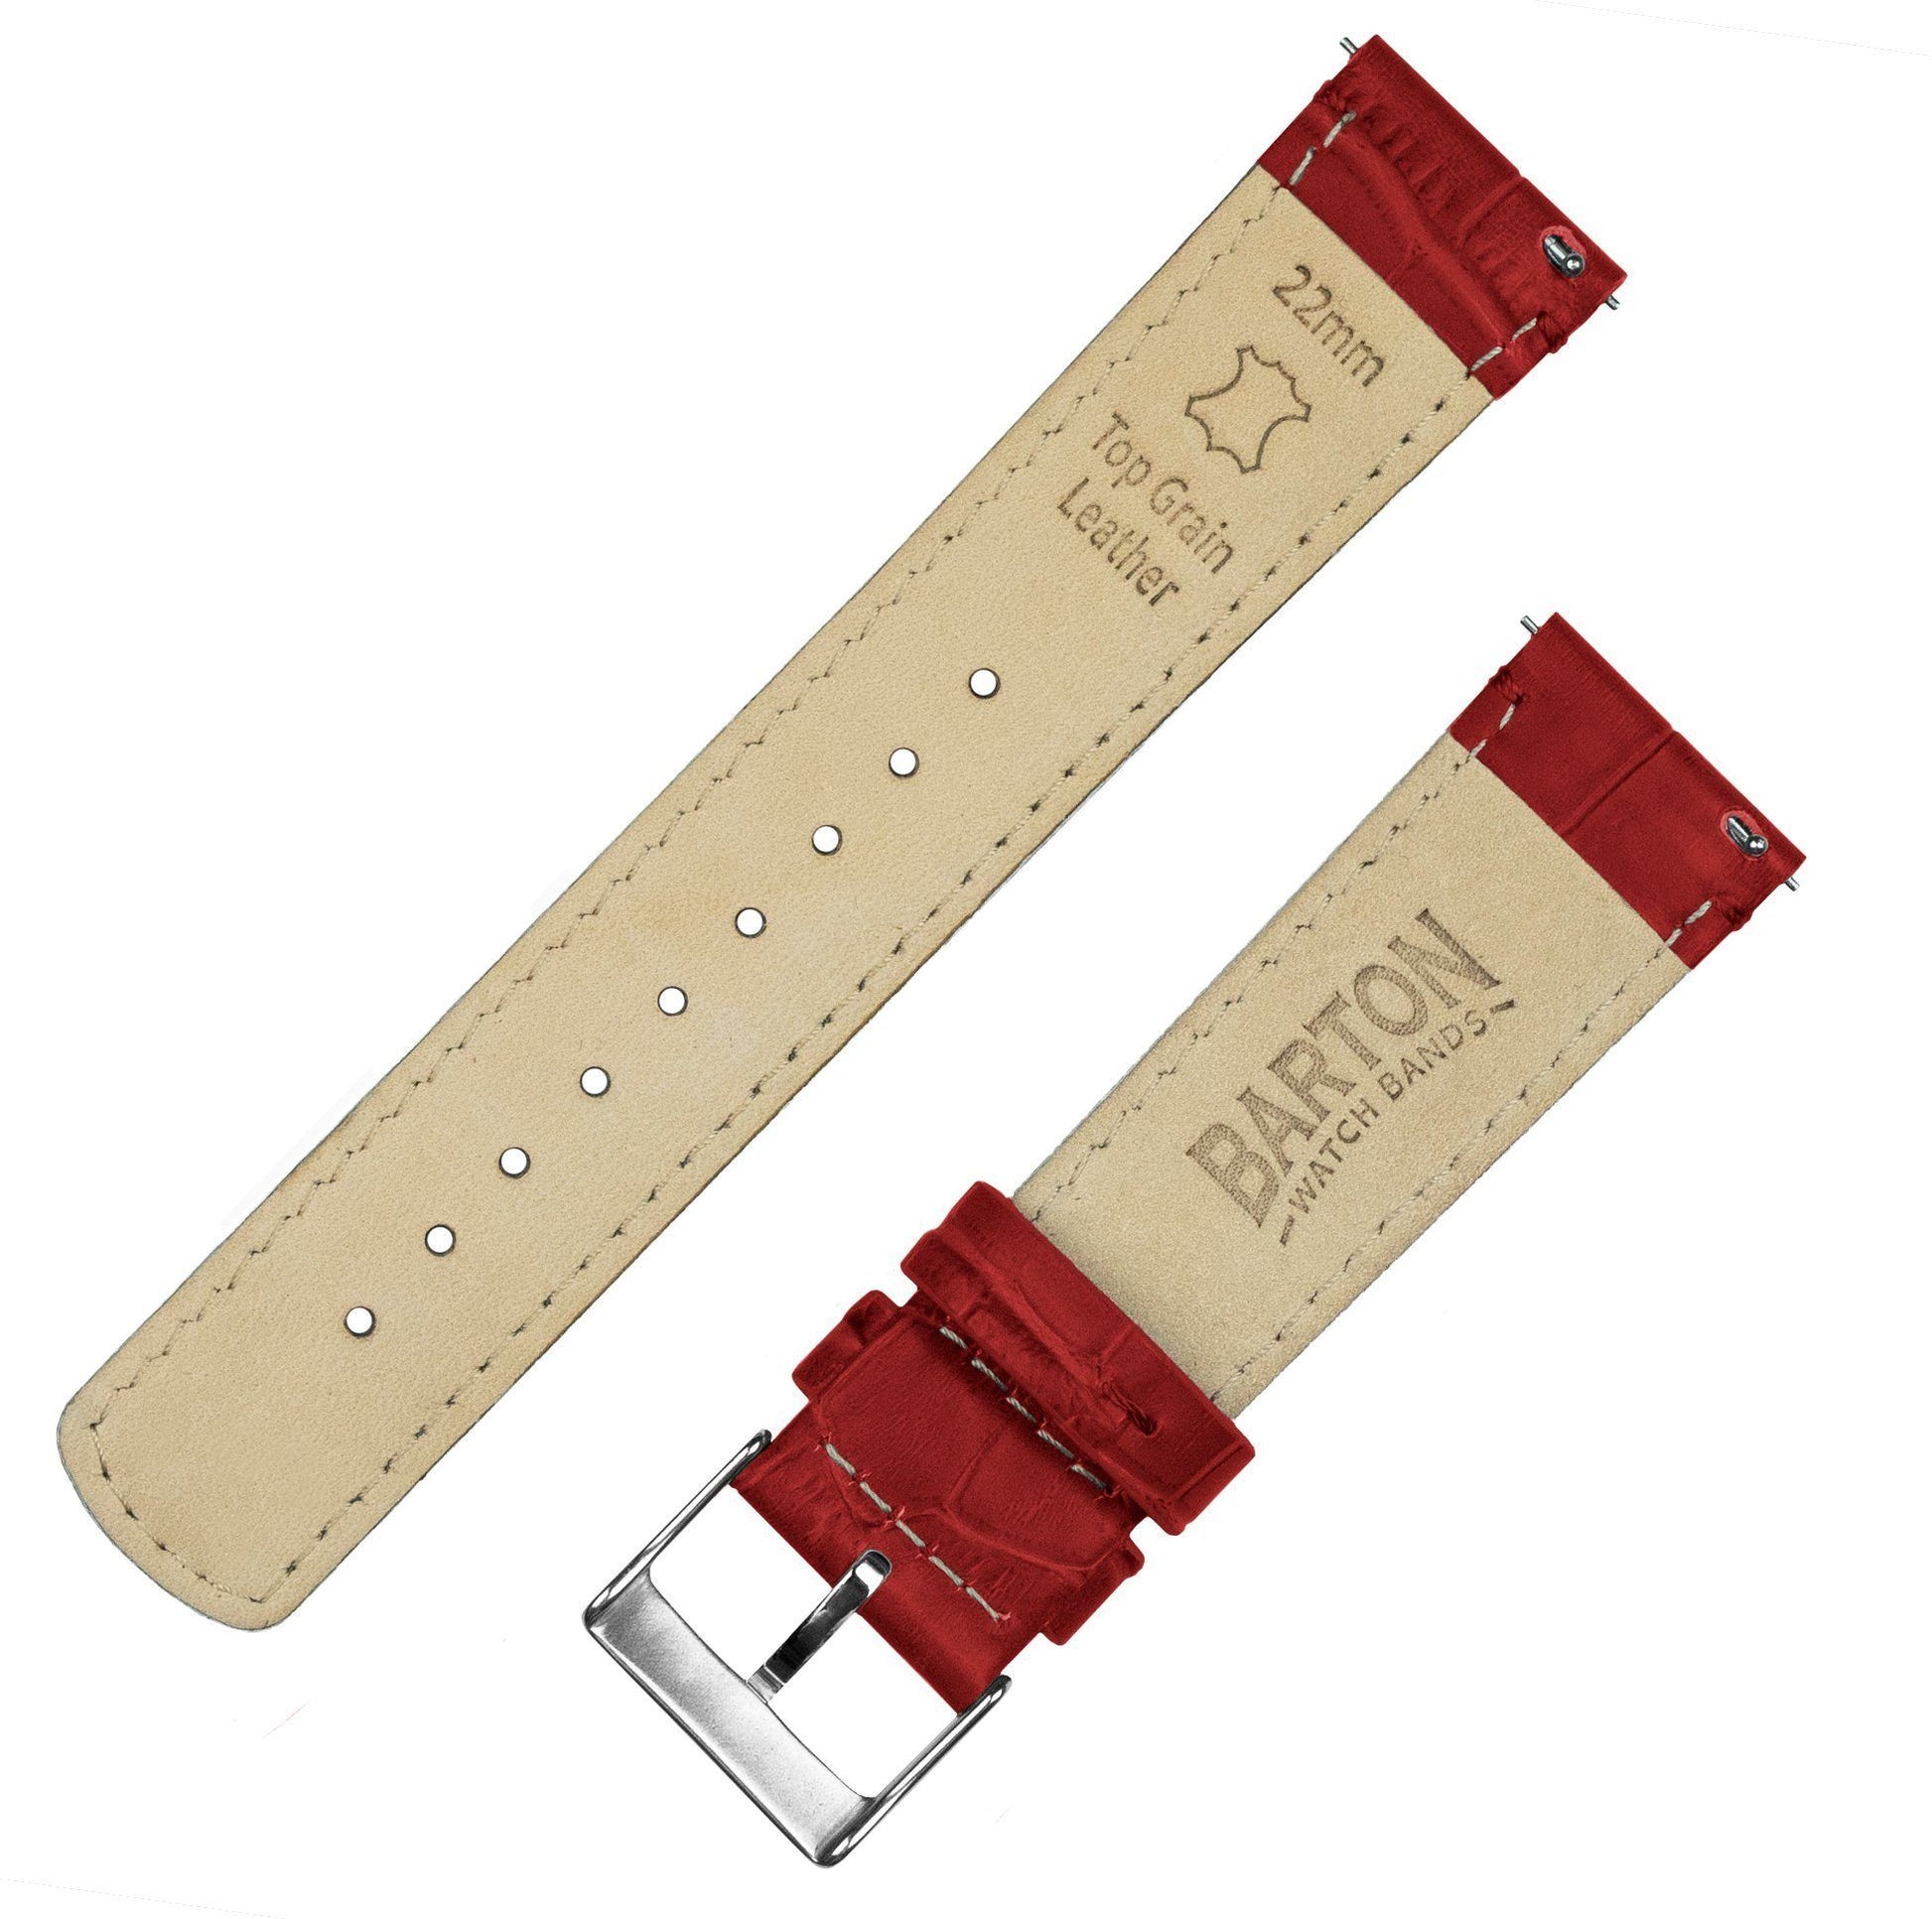 Samsung Galaxy Watch | Crimson Red Alligator Grain Leather - Barton Watch Bands